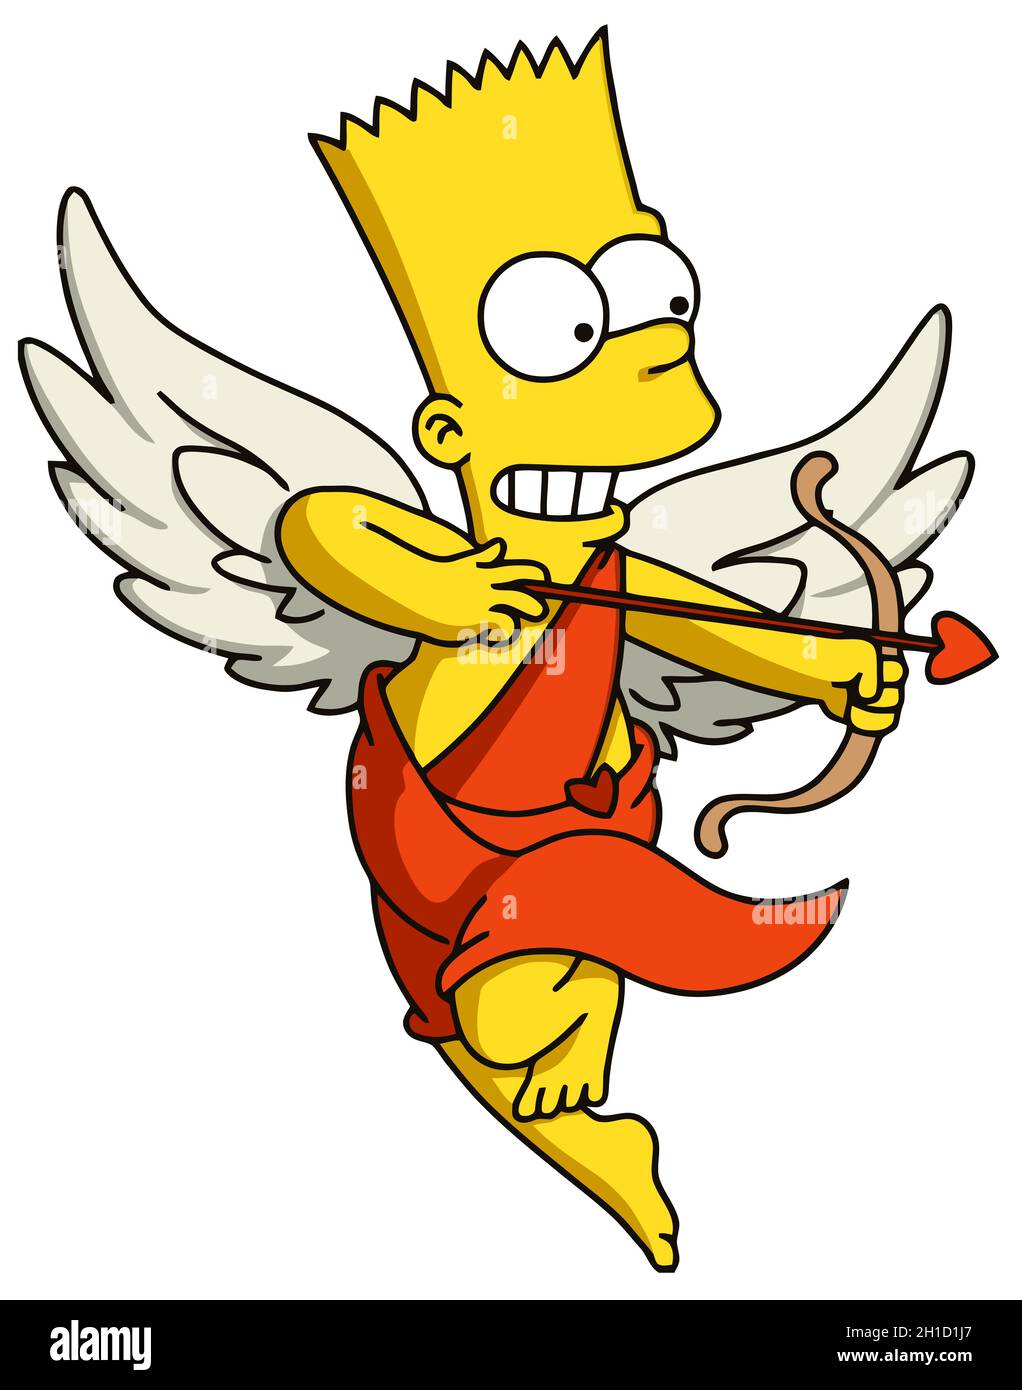 Bart The Simpsons cupid amour ange illustration dessin animé éditorial Banque D'Images